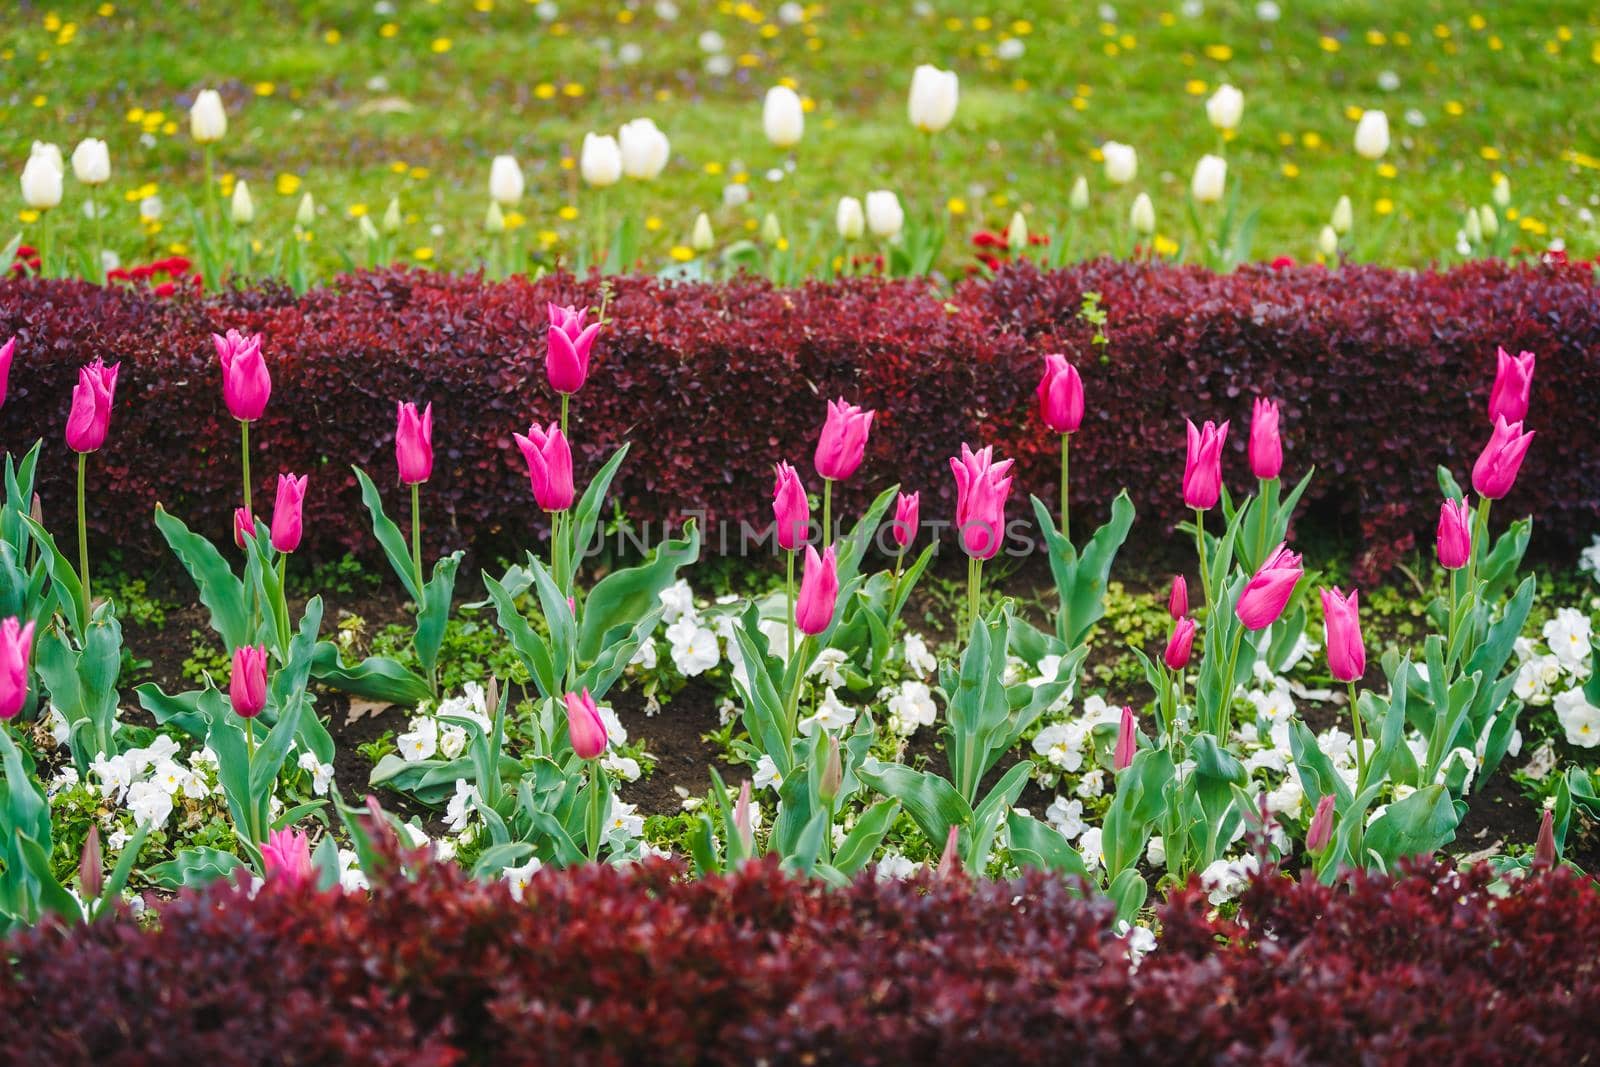 Beautiful Blooming Tulips In Spring Garden. Selective focus